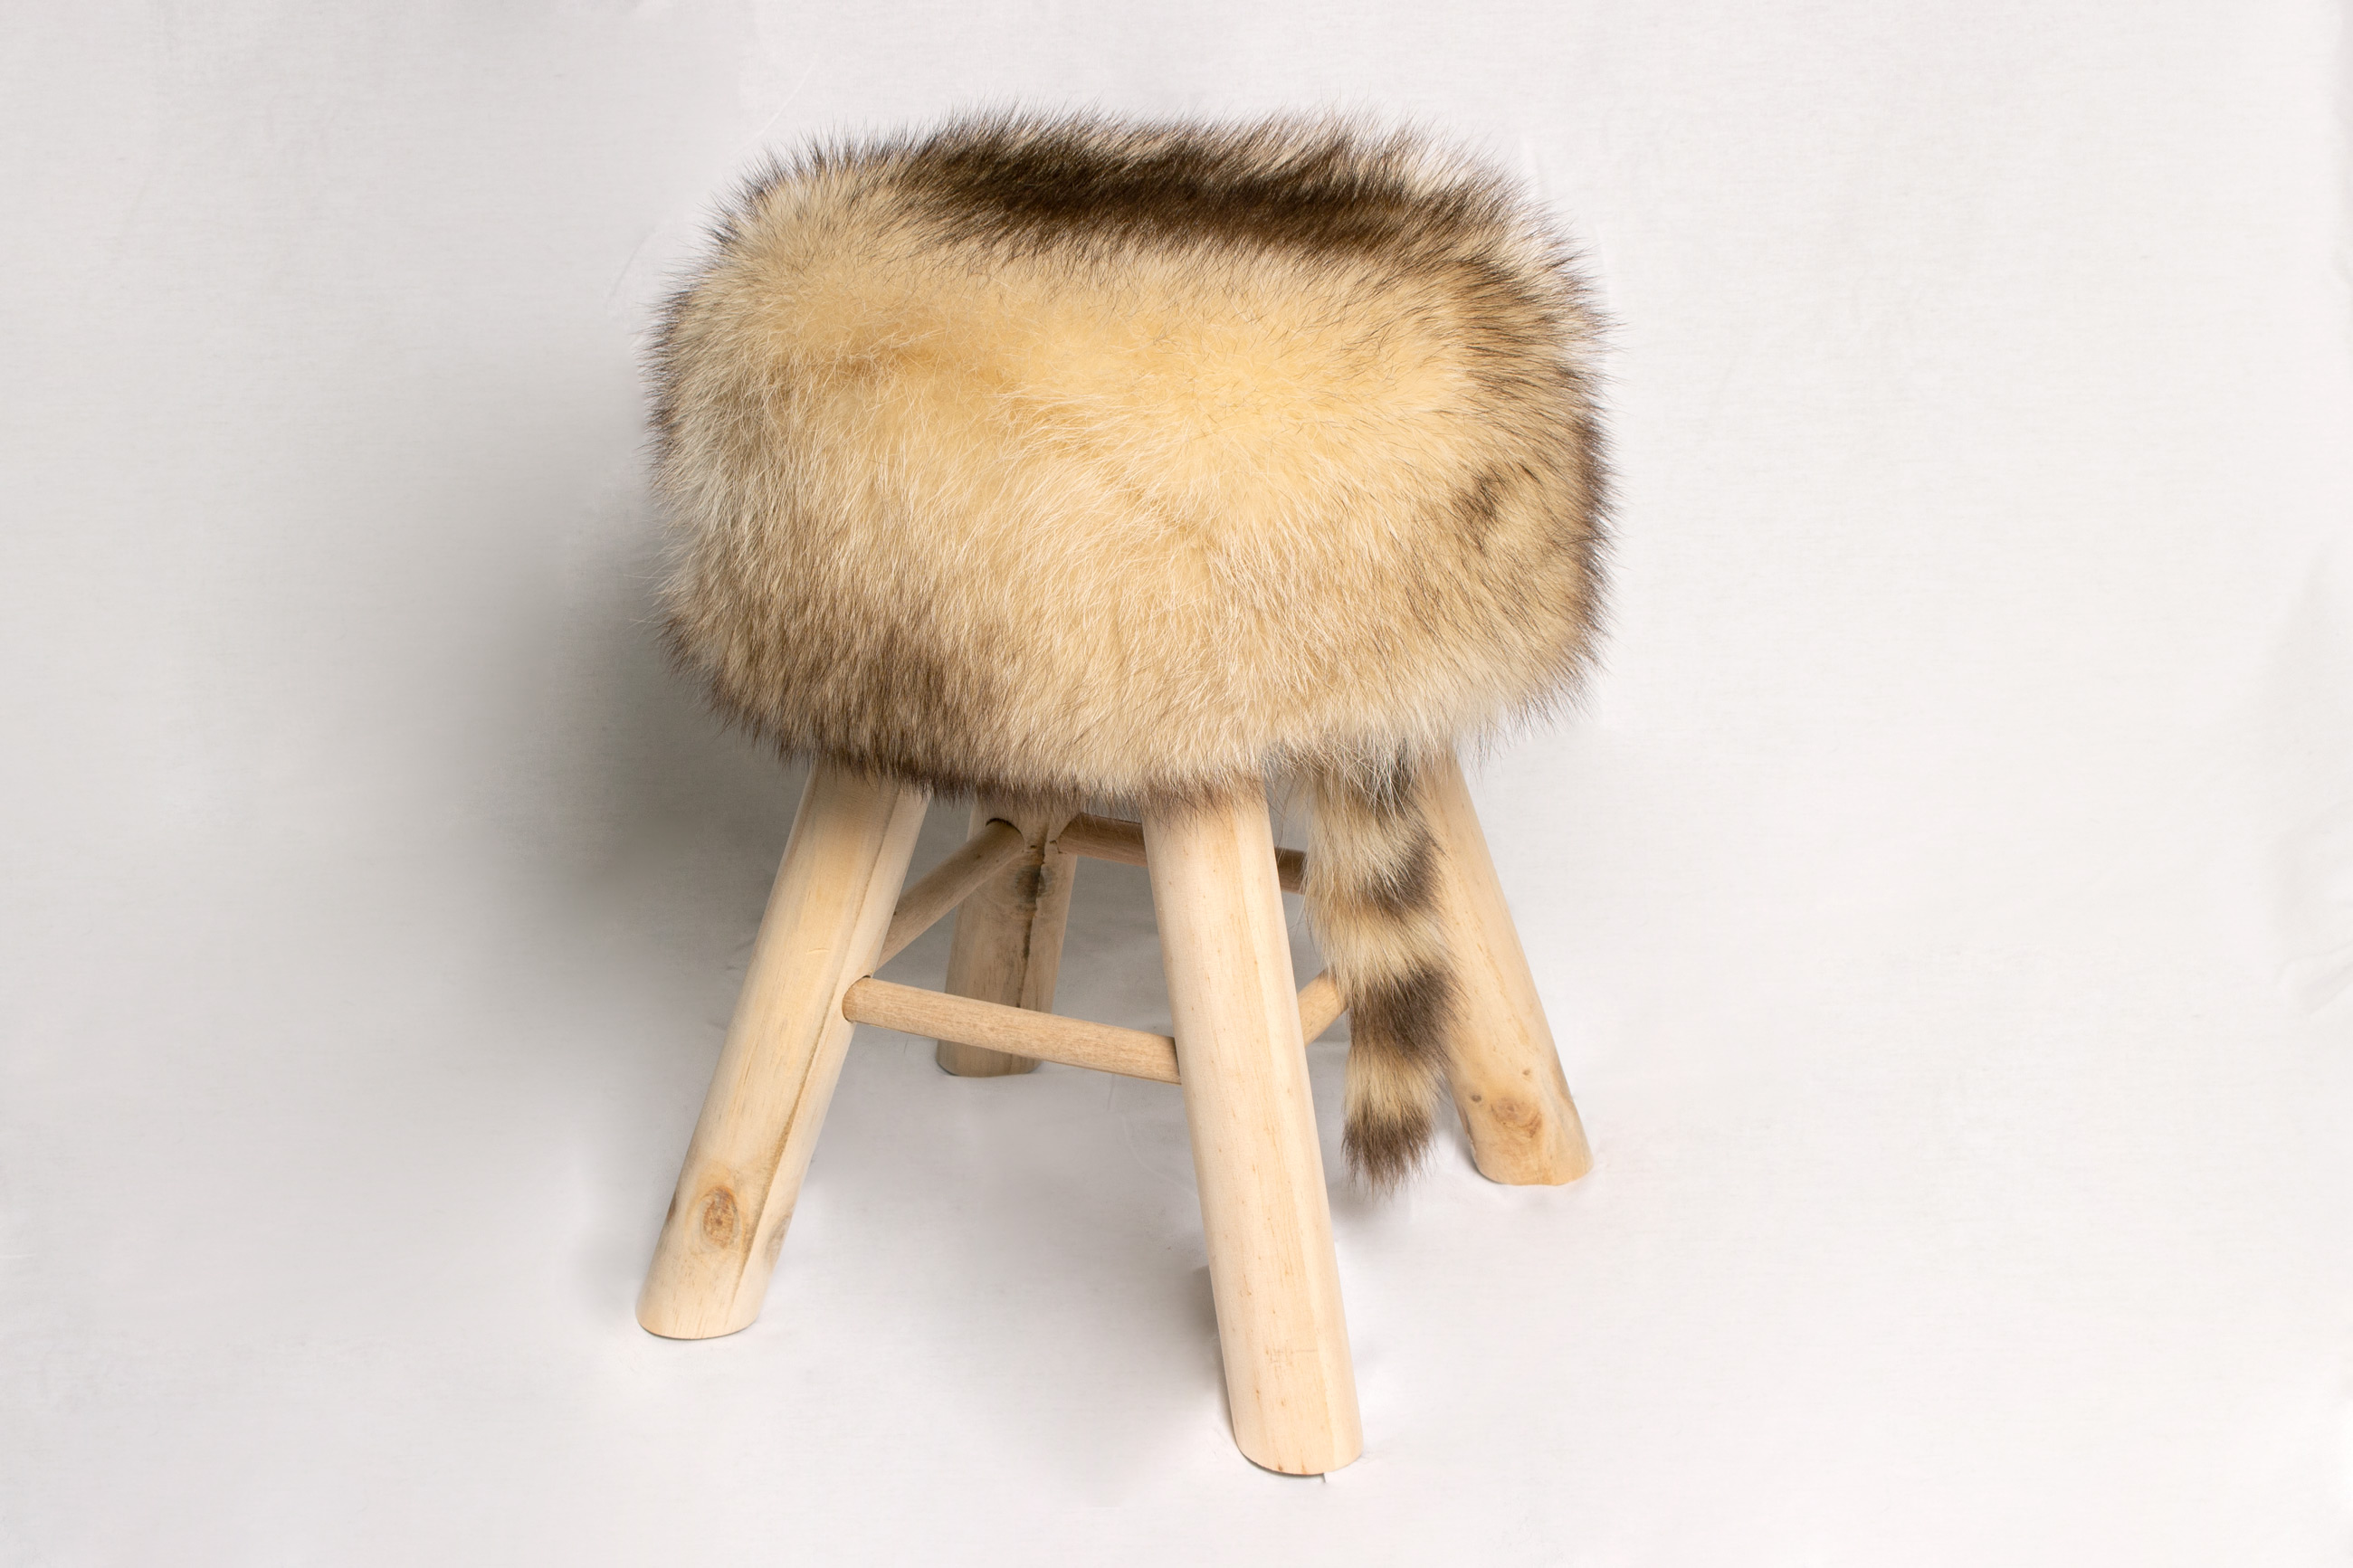 Pine-Wood Stool made with Genuine Canadian Raccoon Fur